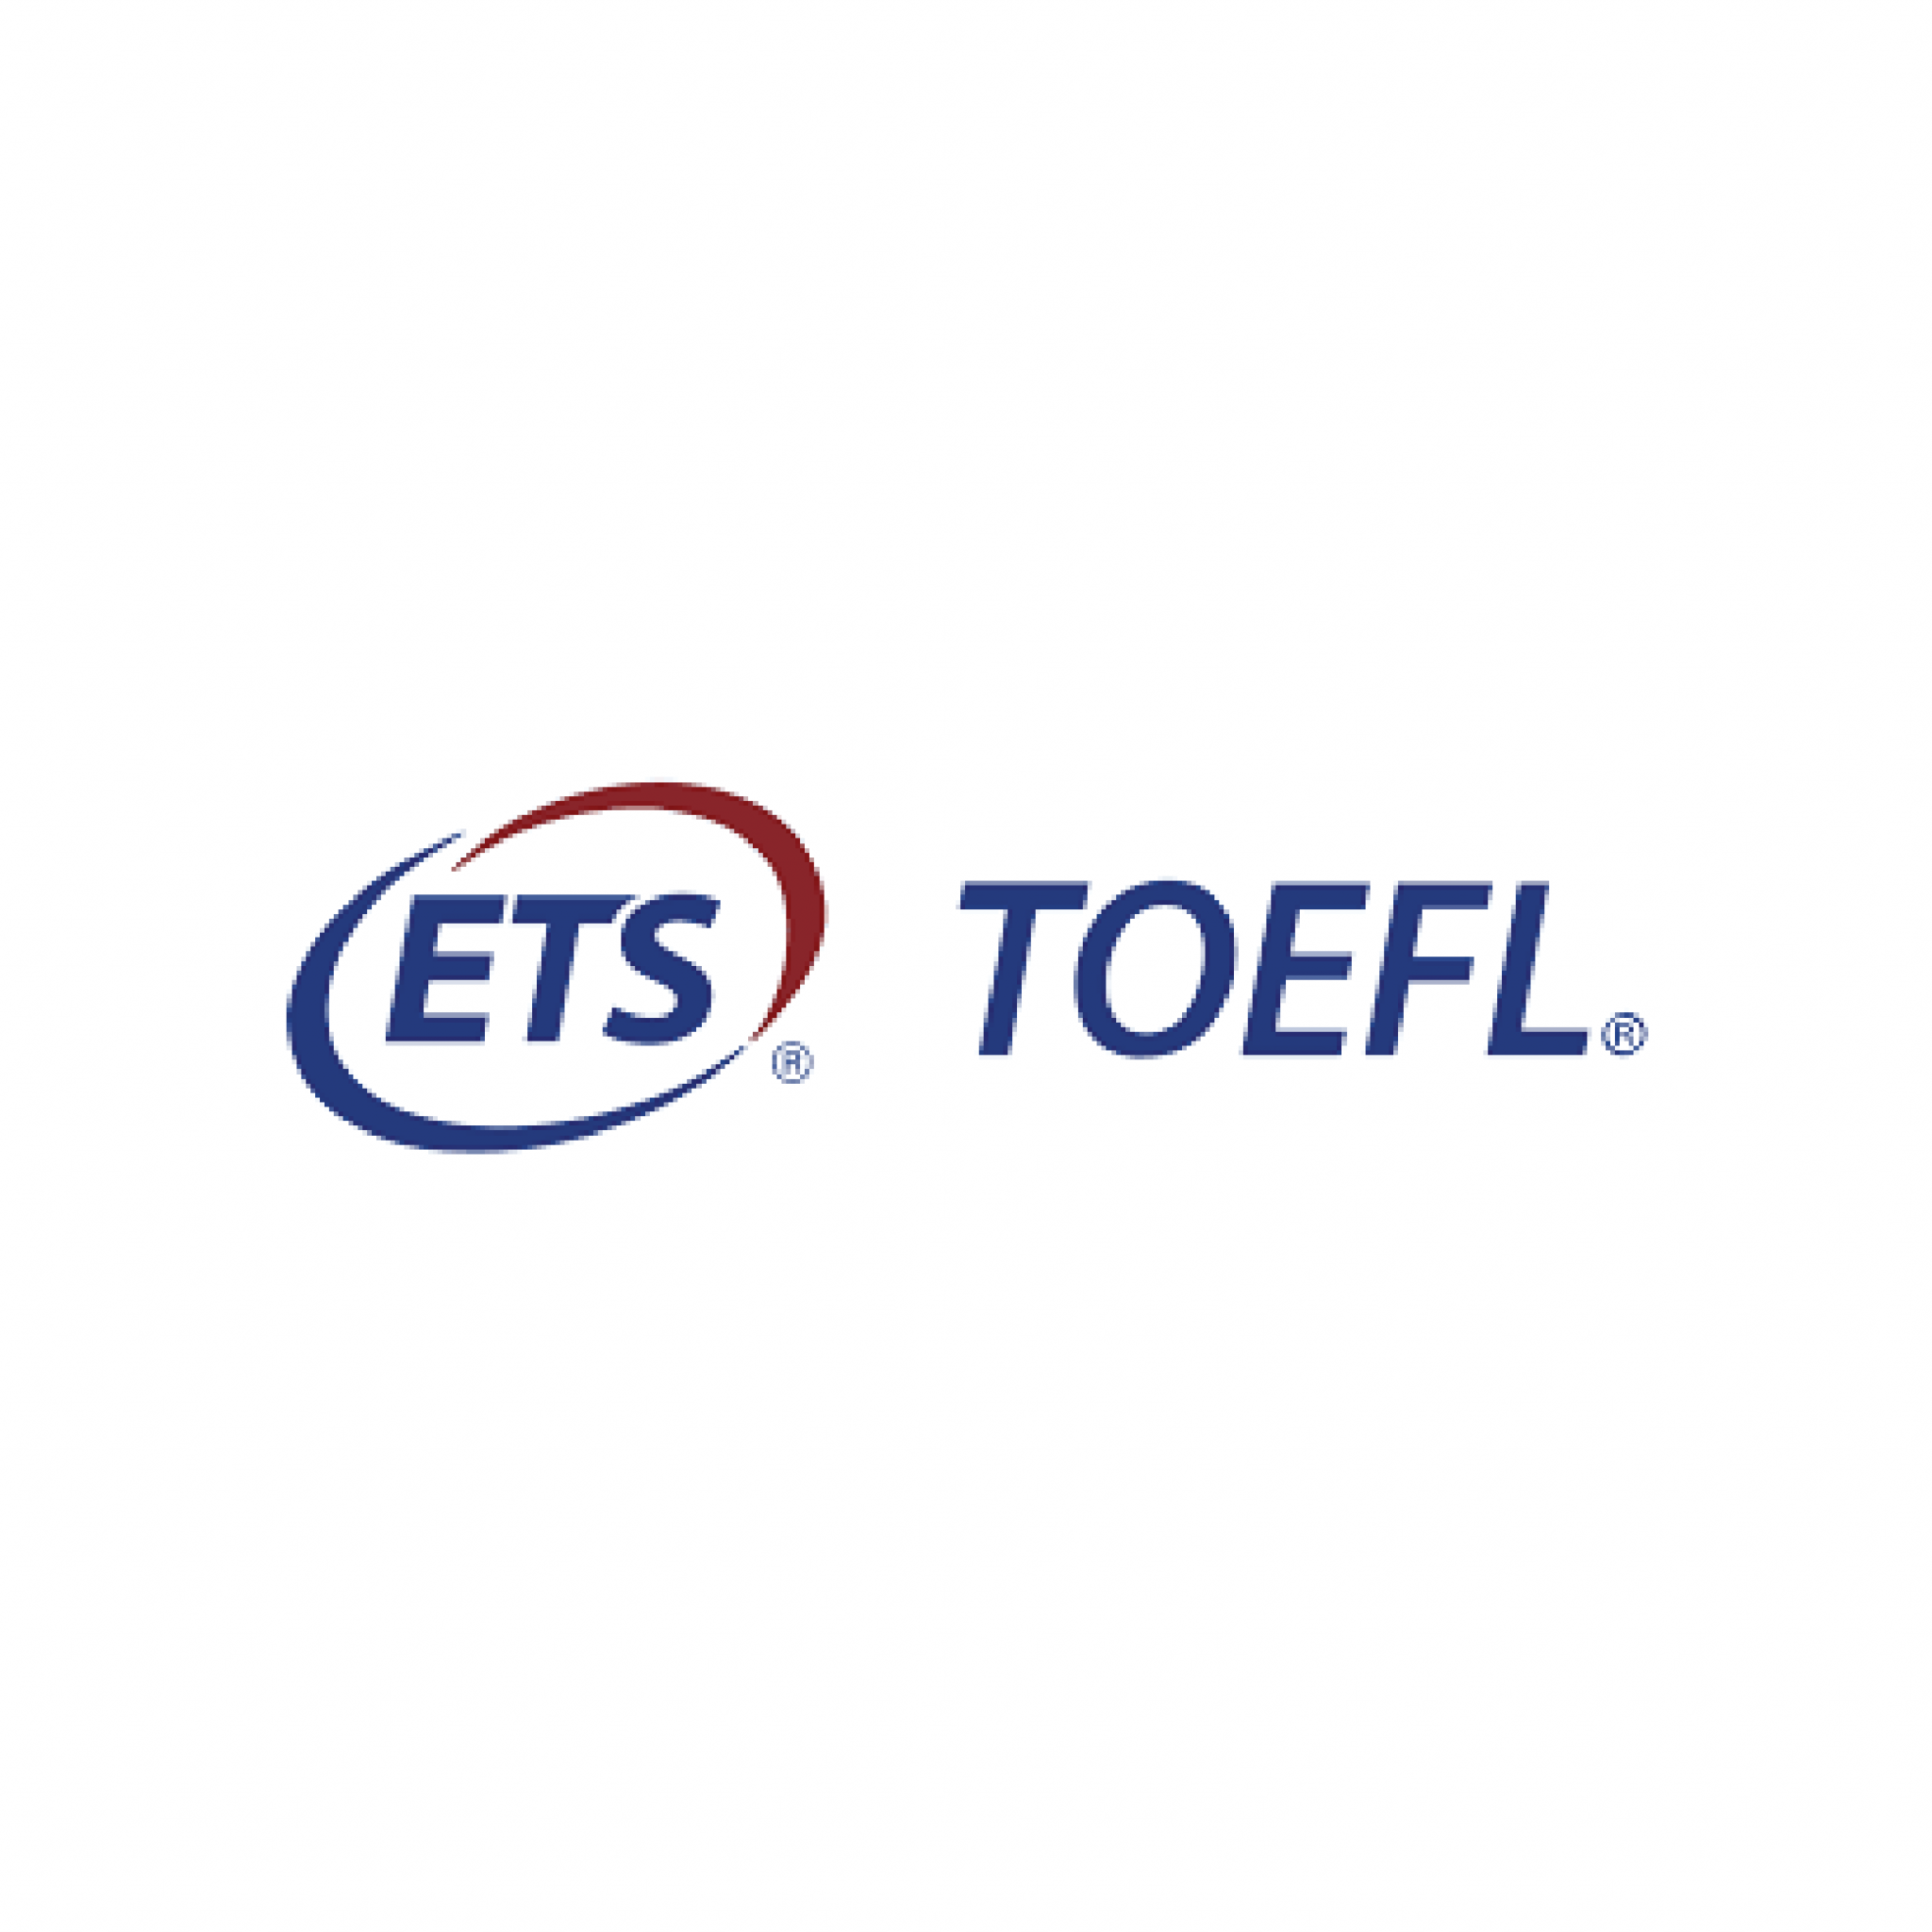 ETS TOEFL nos engagements qualité-01